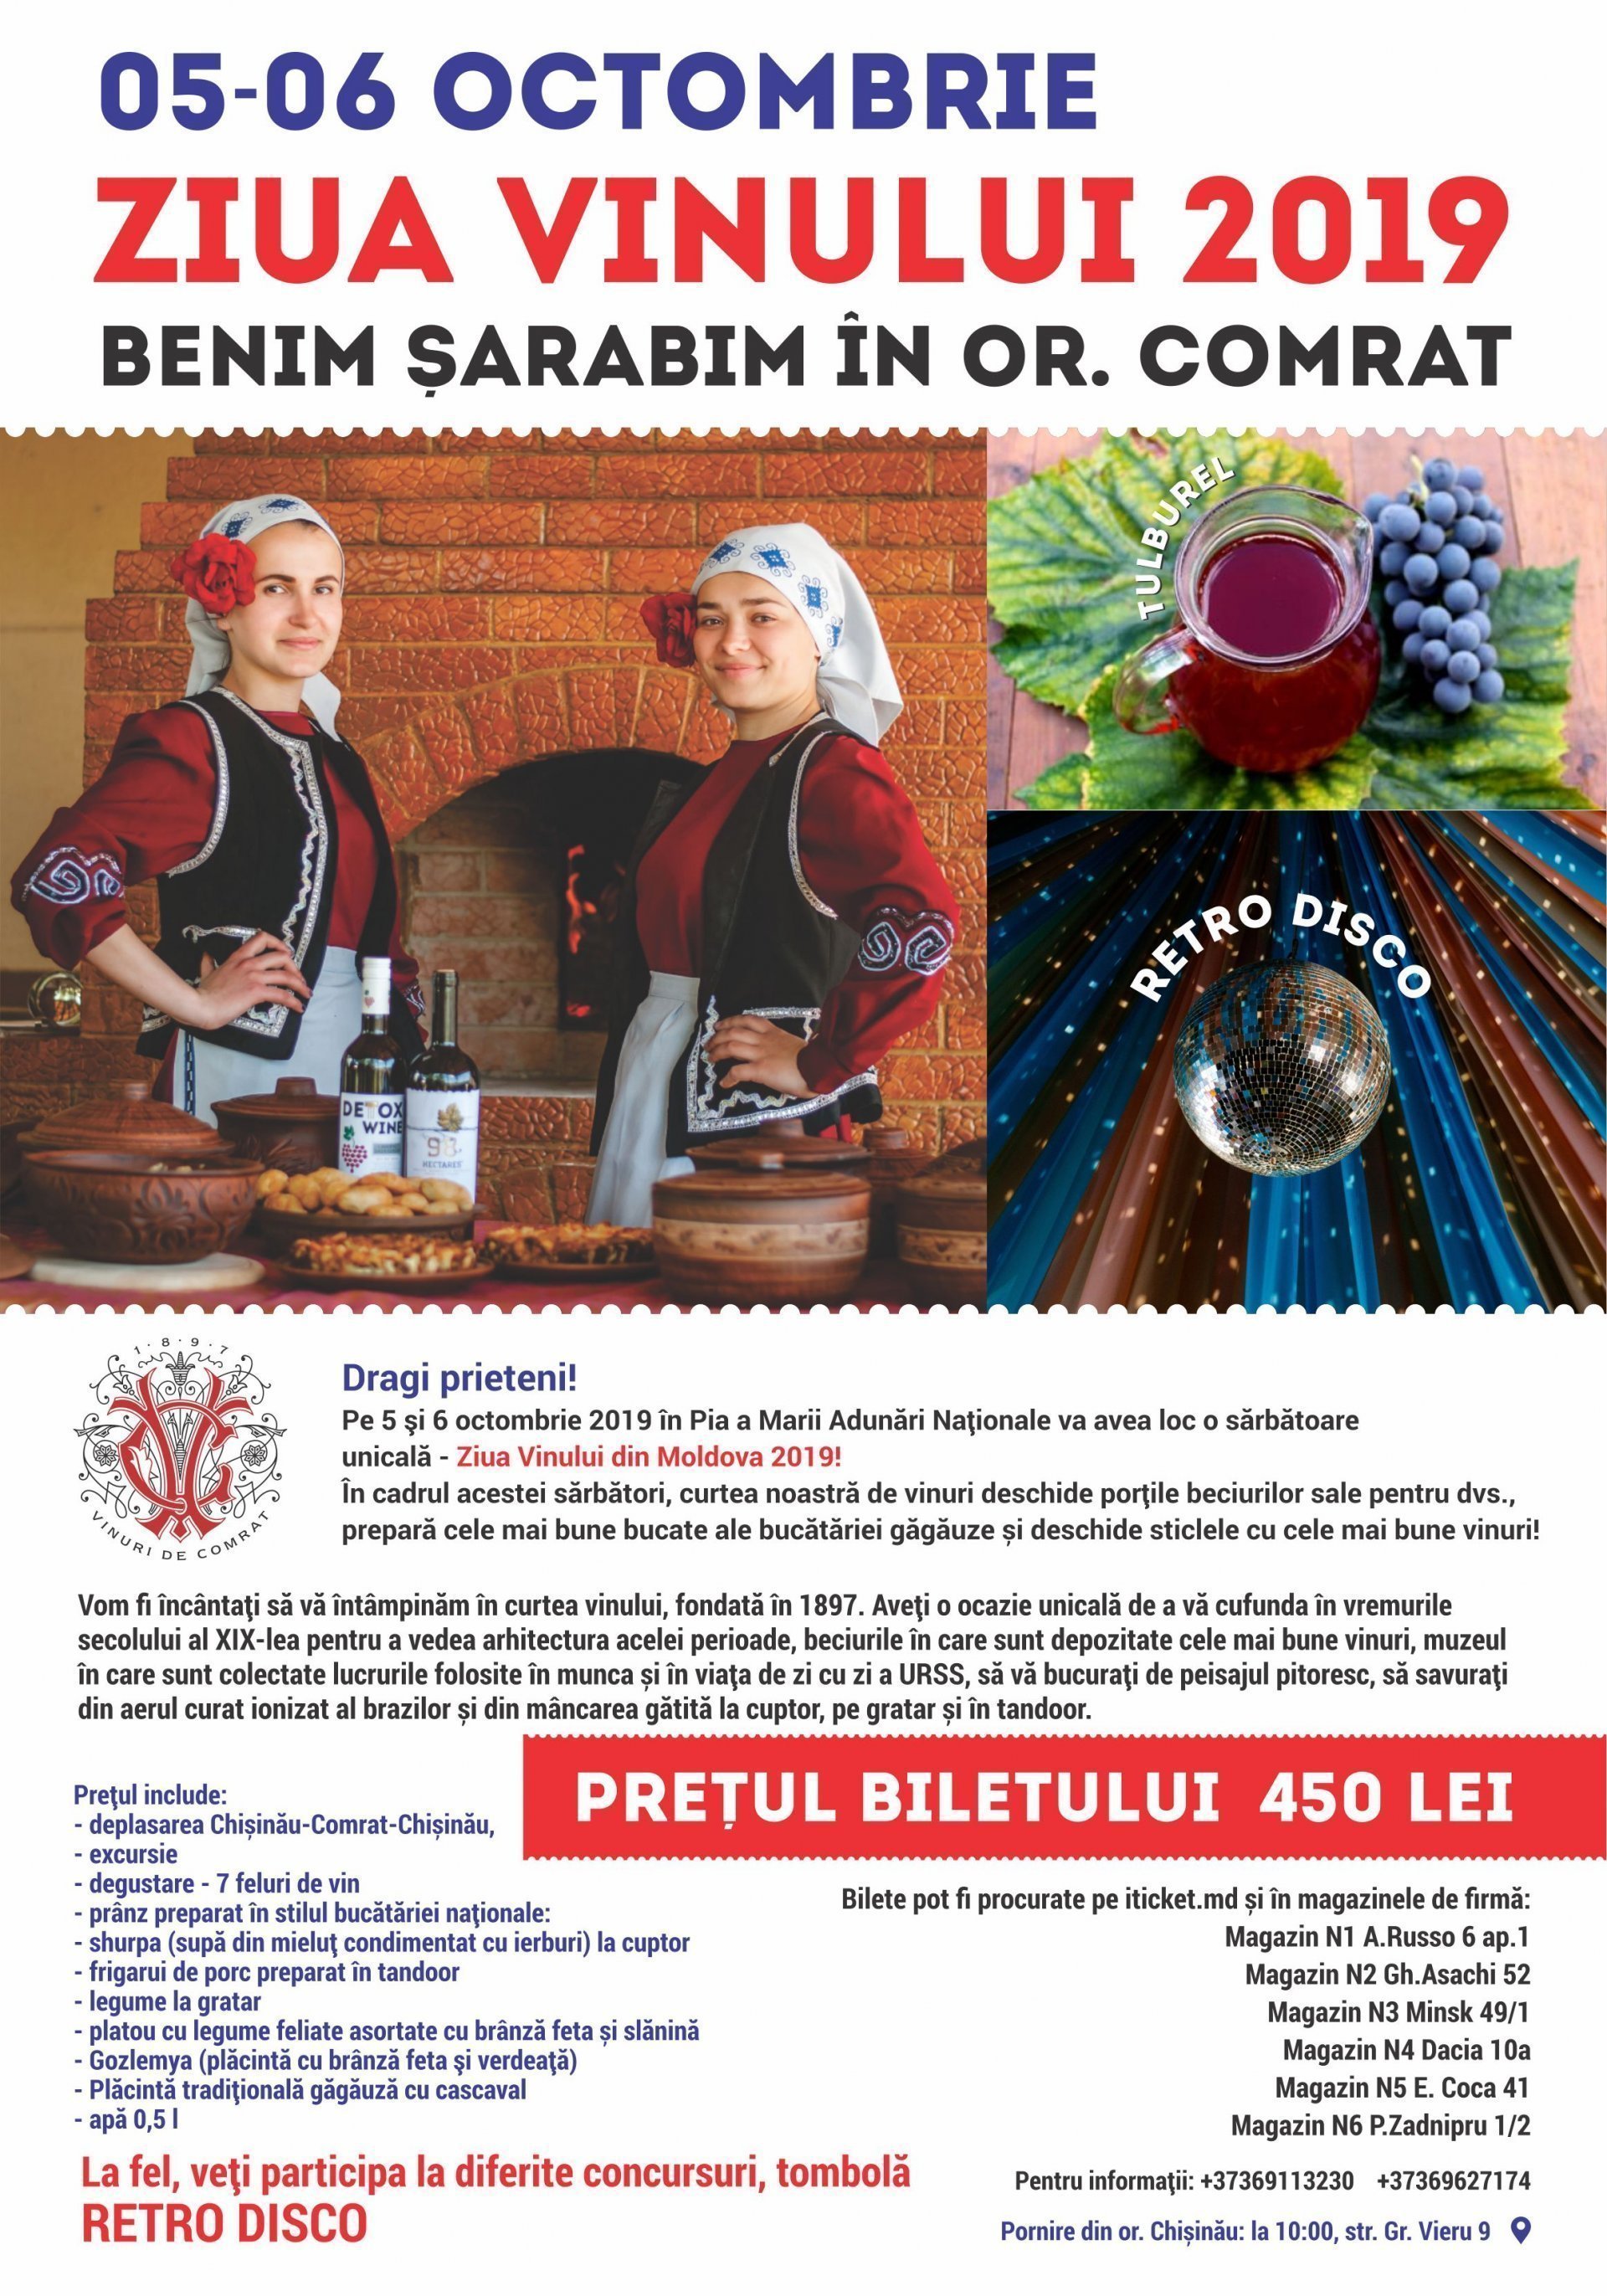 Ziua Vinului - Benim Sarabim Fest in Comrat